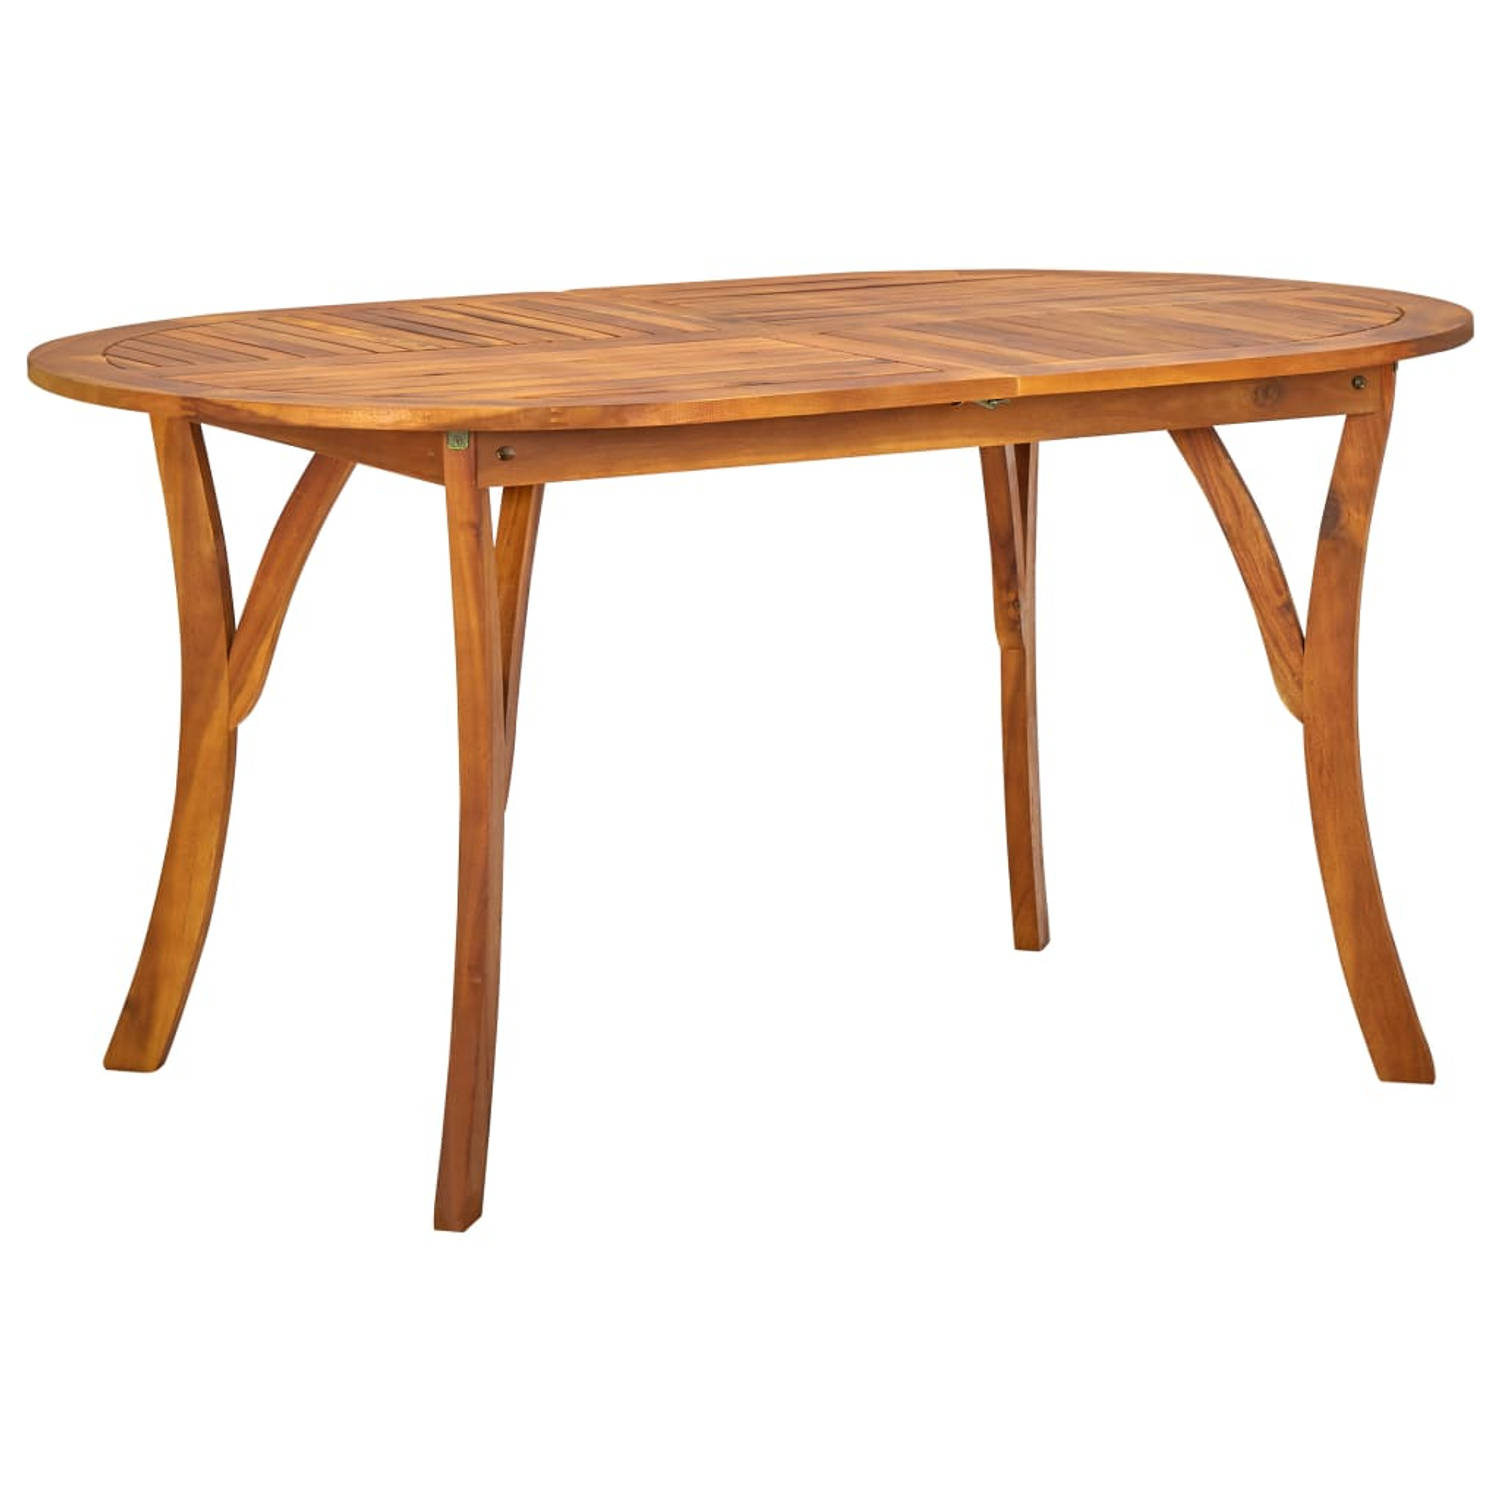 The Living Store Tuinset - Acaciahout - Antraciet - 150x90x75 cm - Inclusief tafel en 2 stoelen